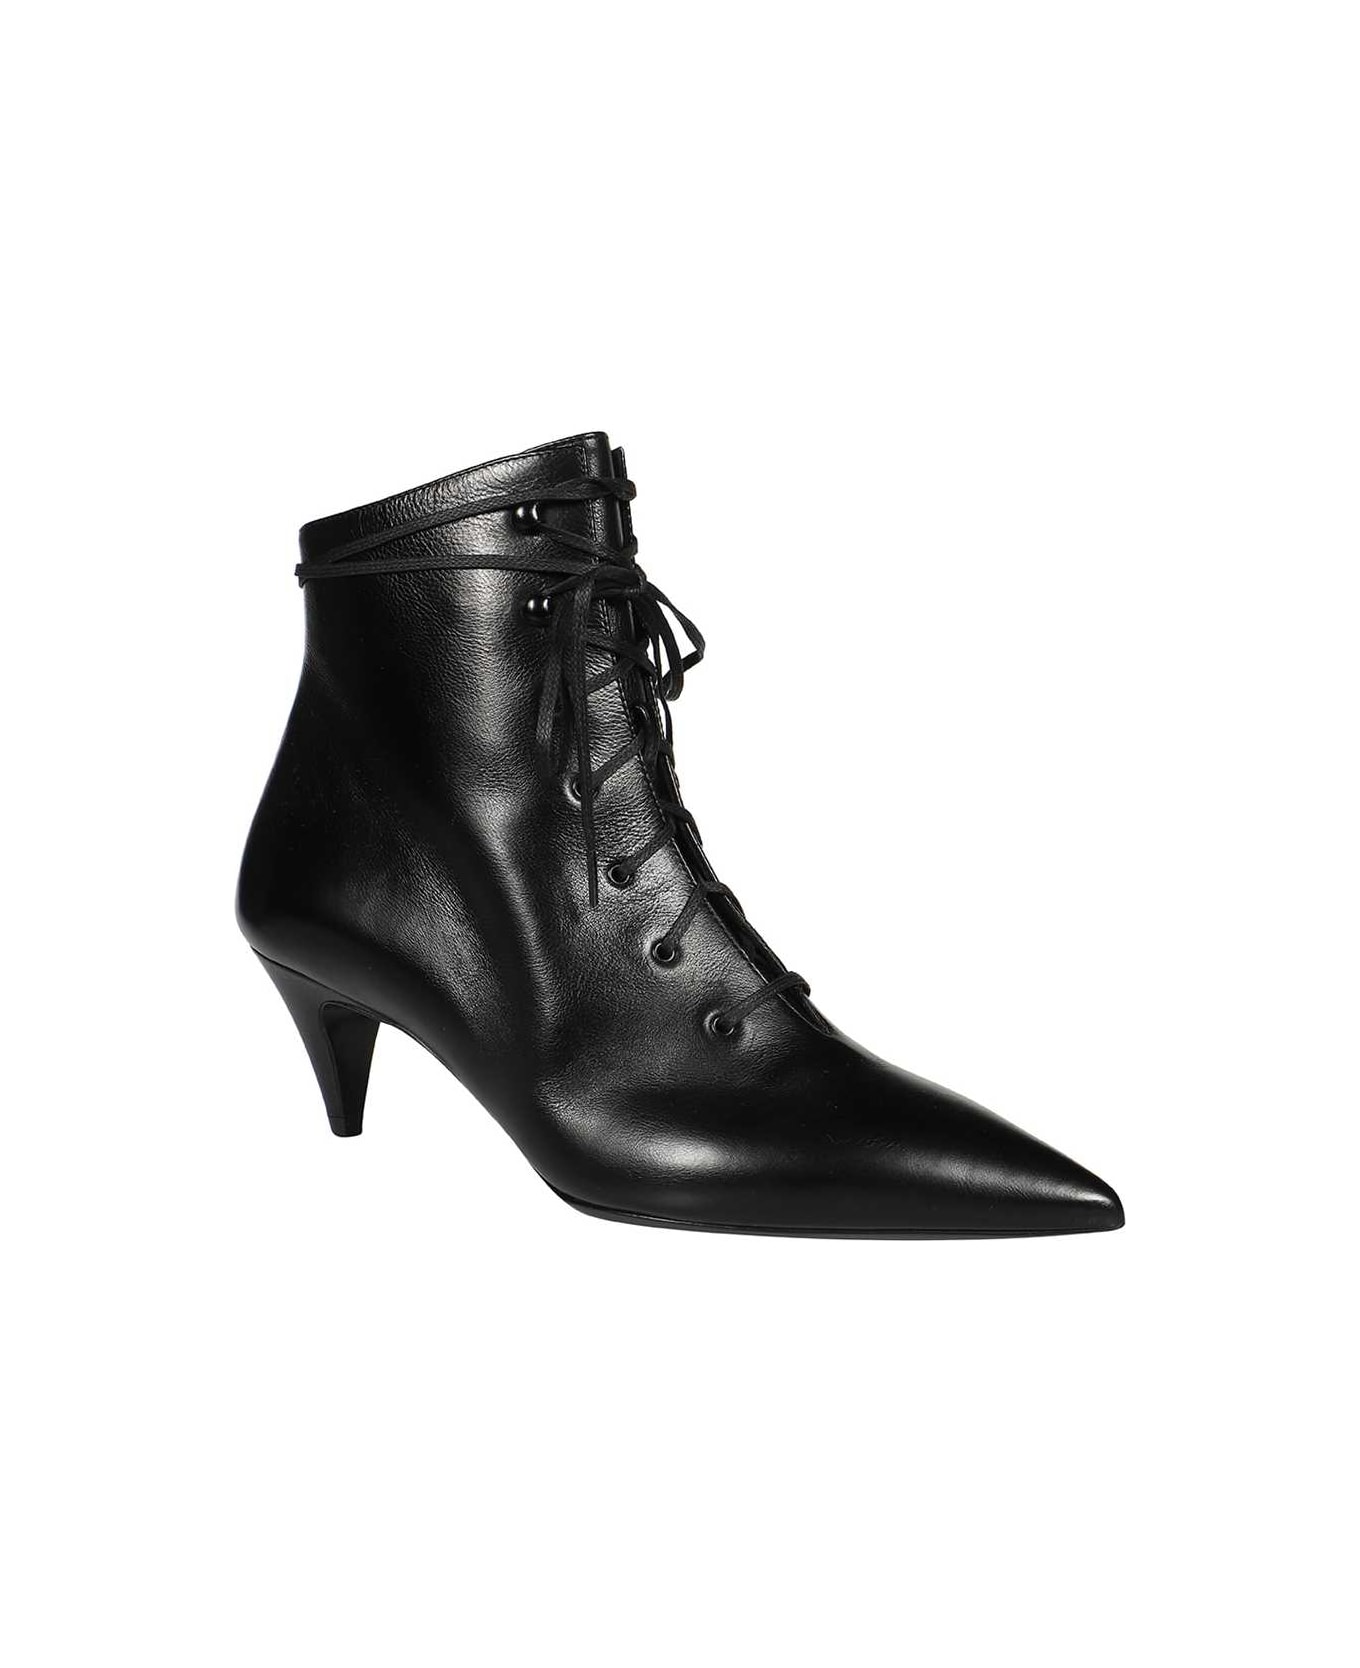 Saint Laurent Leather Ankle Boots - black ブーツ